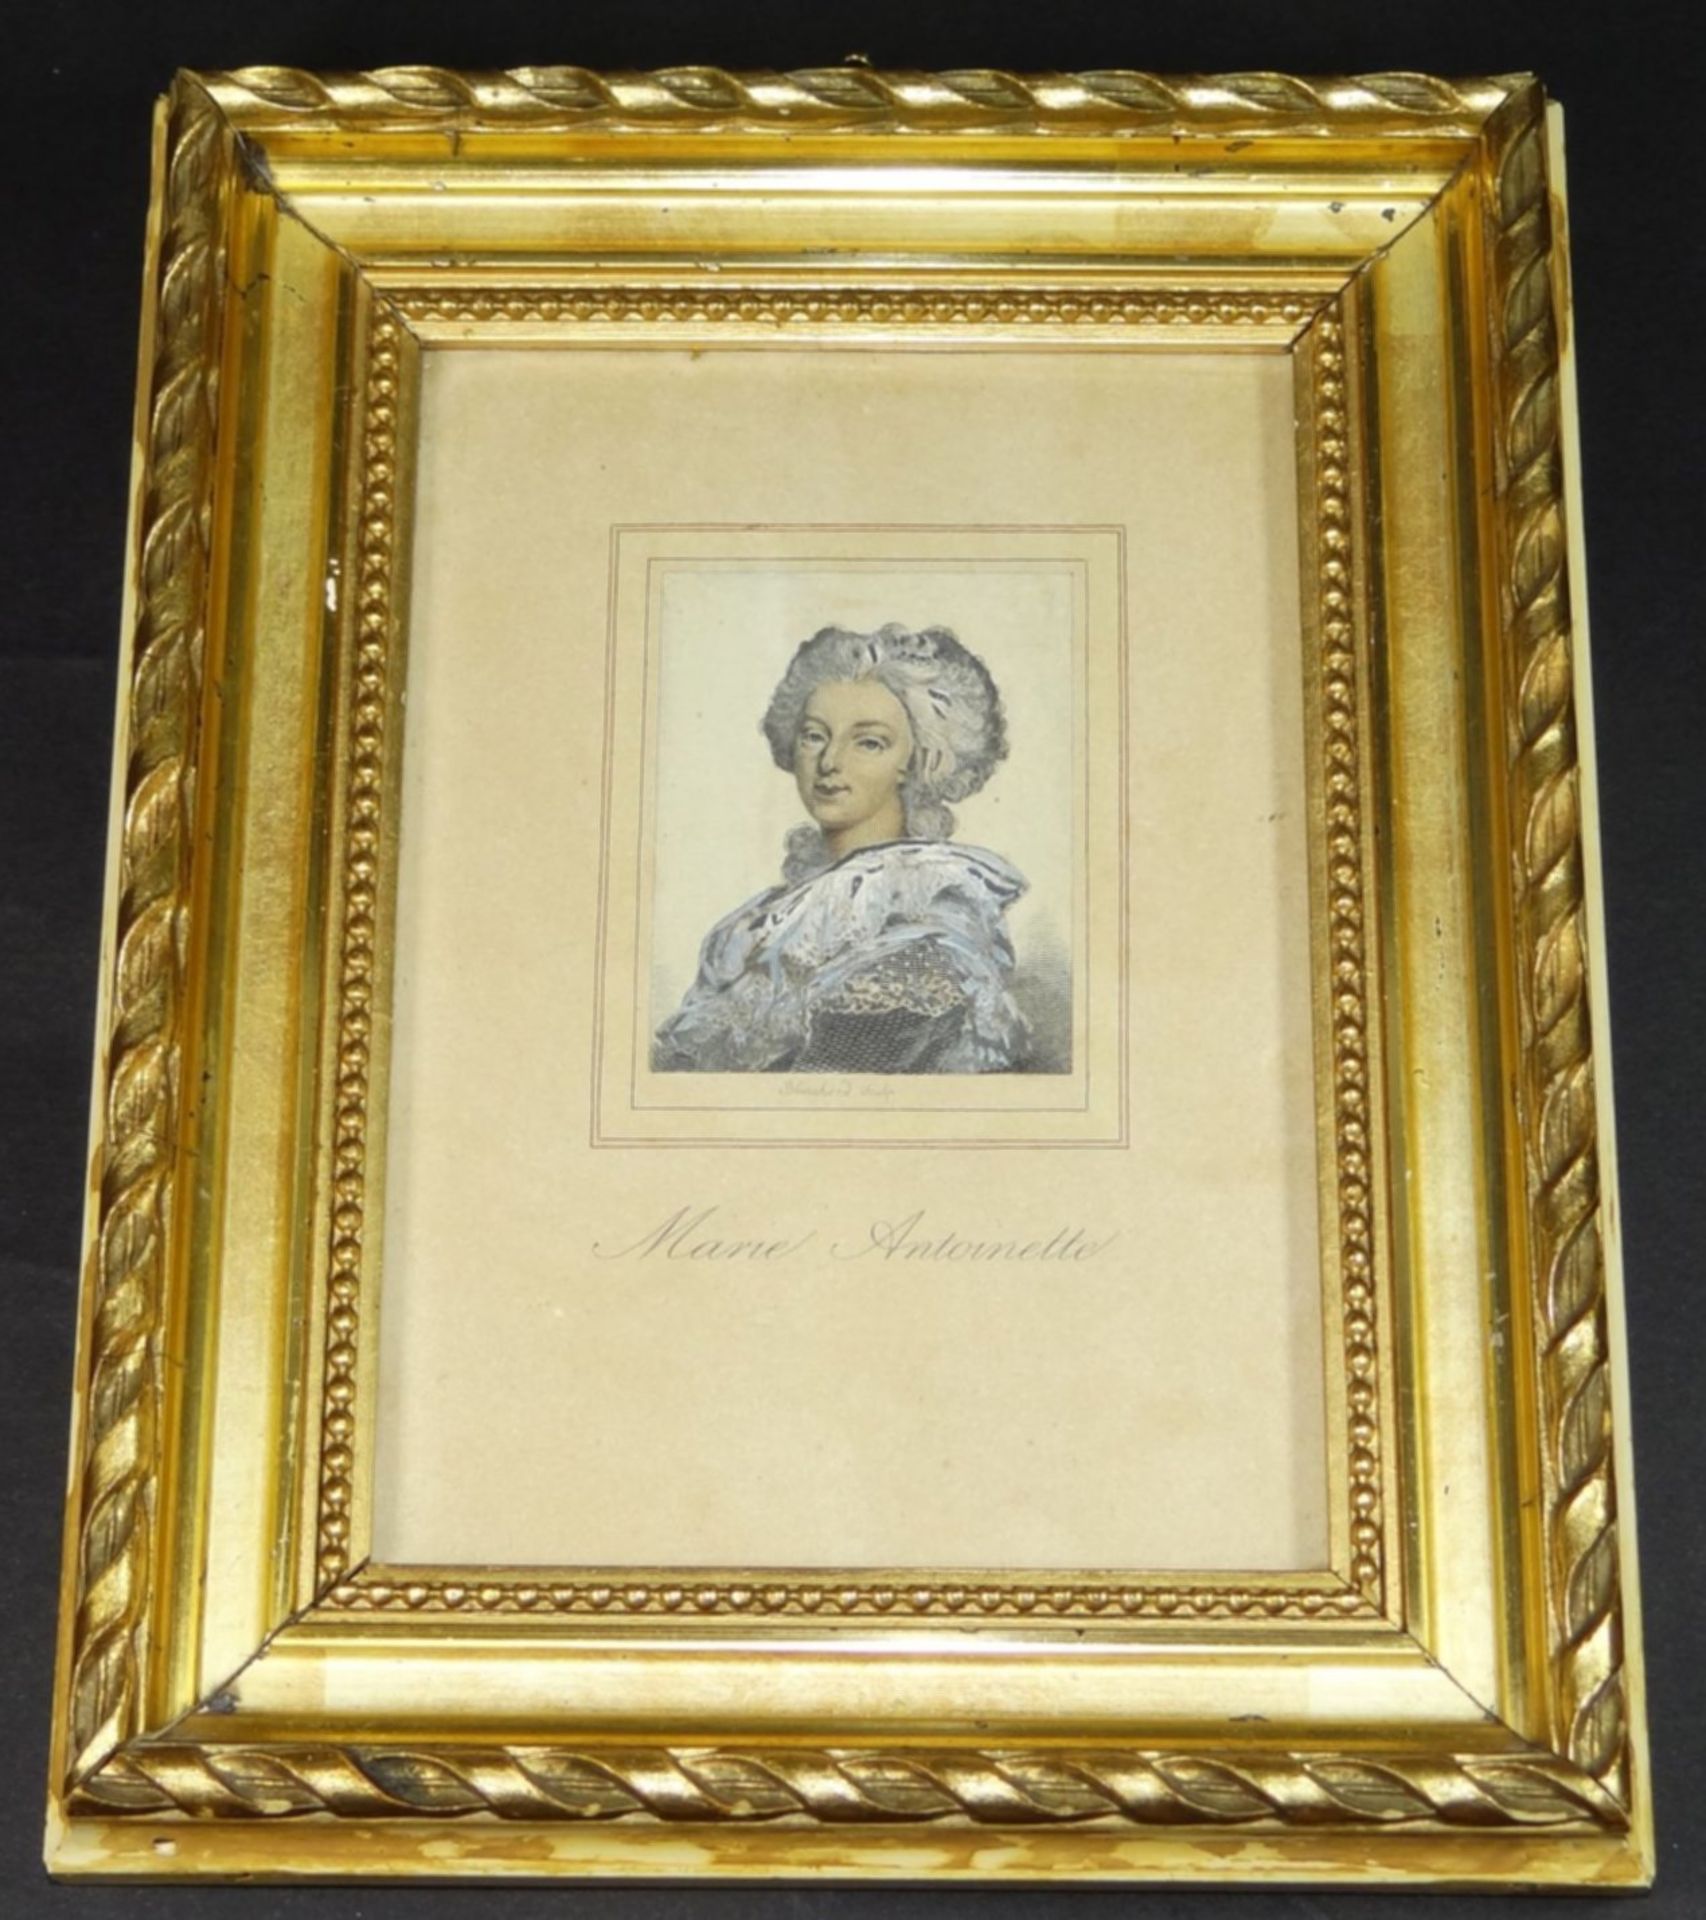 kl. Lithografie um 1840 "Marie Antoinette", alt ger/Glas, RG 19x15 cm